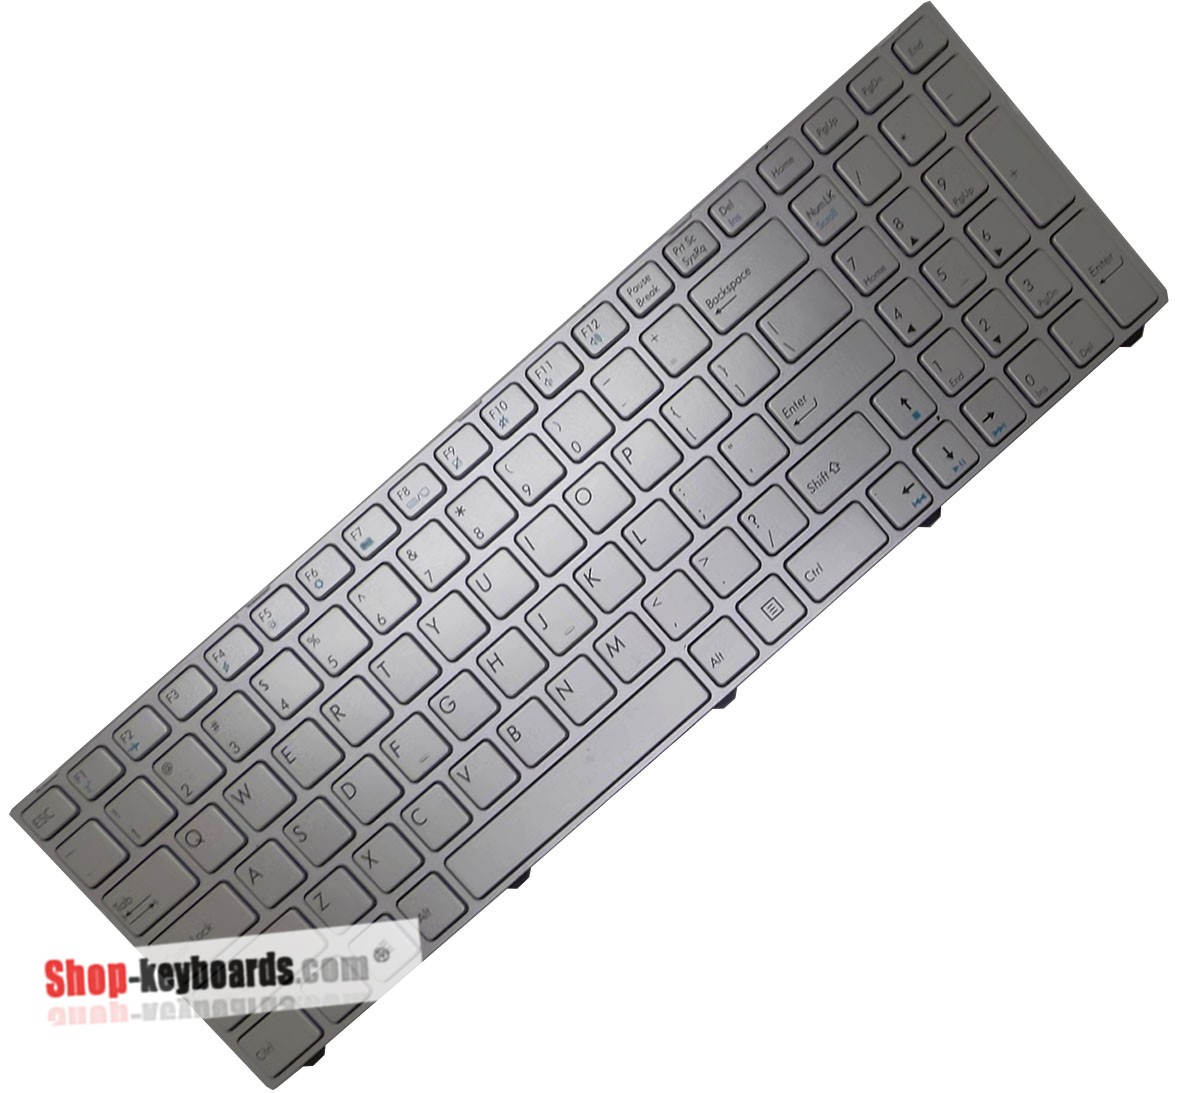 Medion Akoya E7423 Keyboard replacement